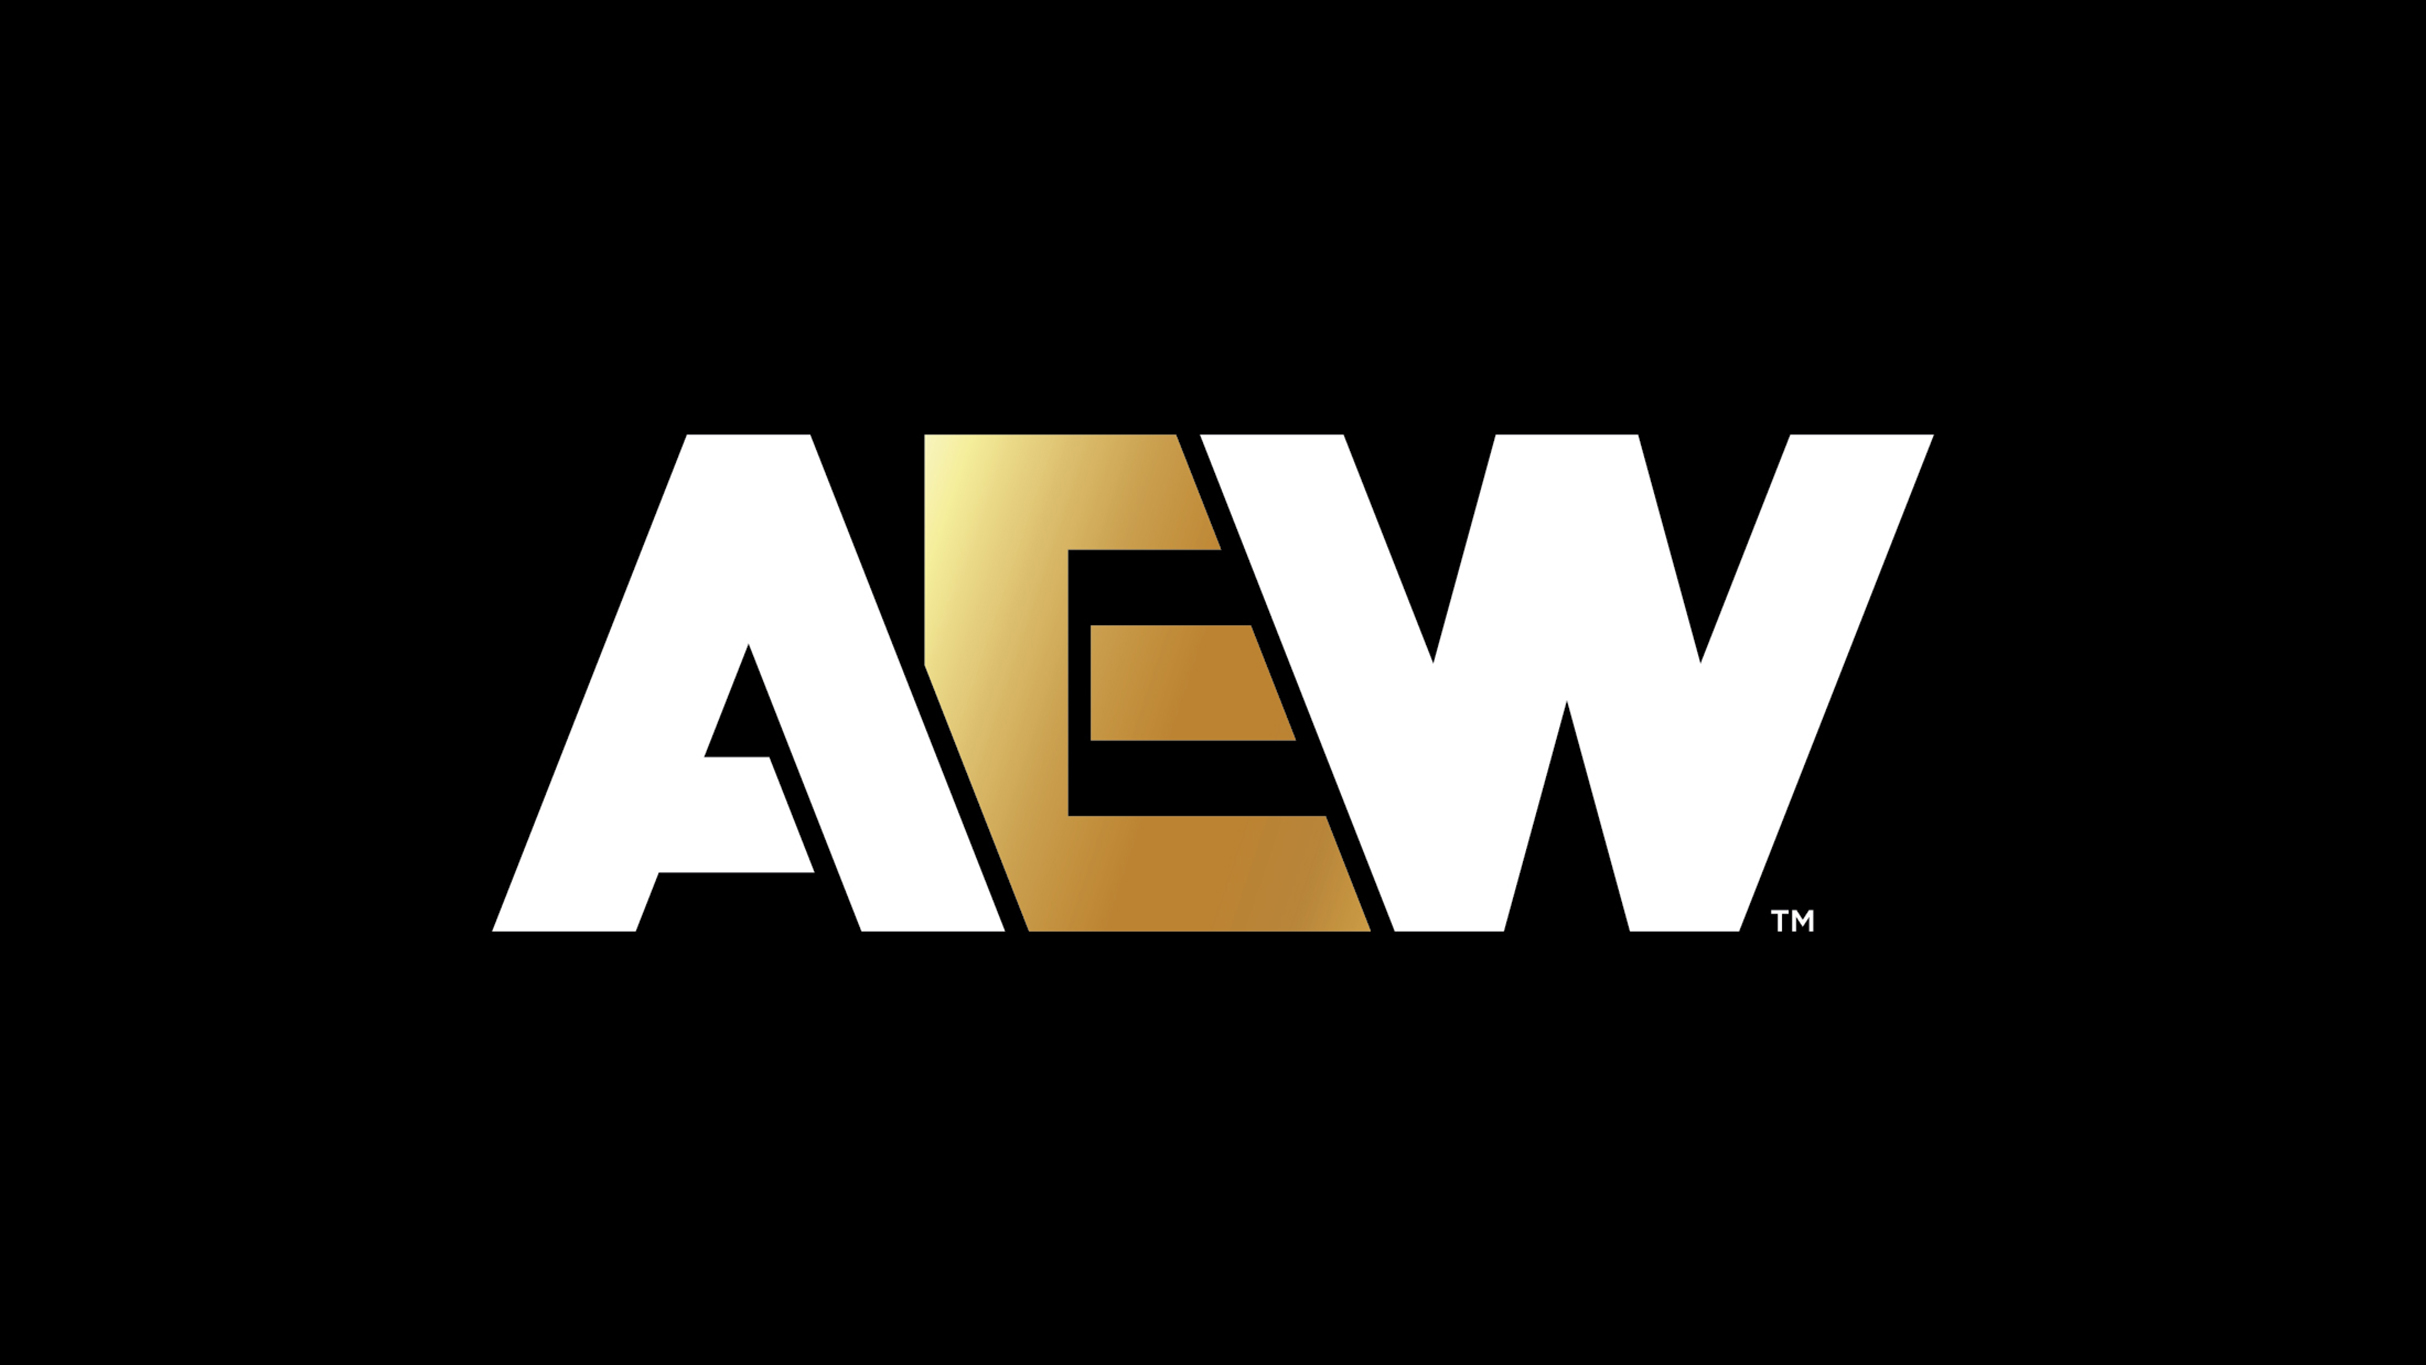 AEW presents Dynamite & Collision